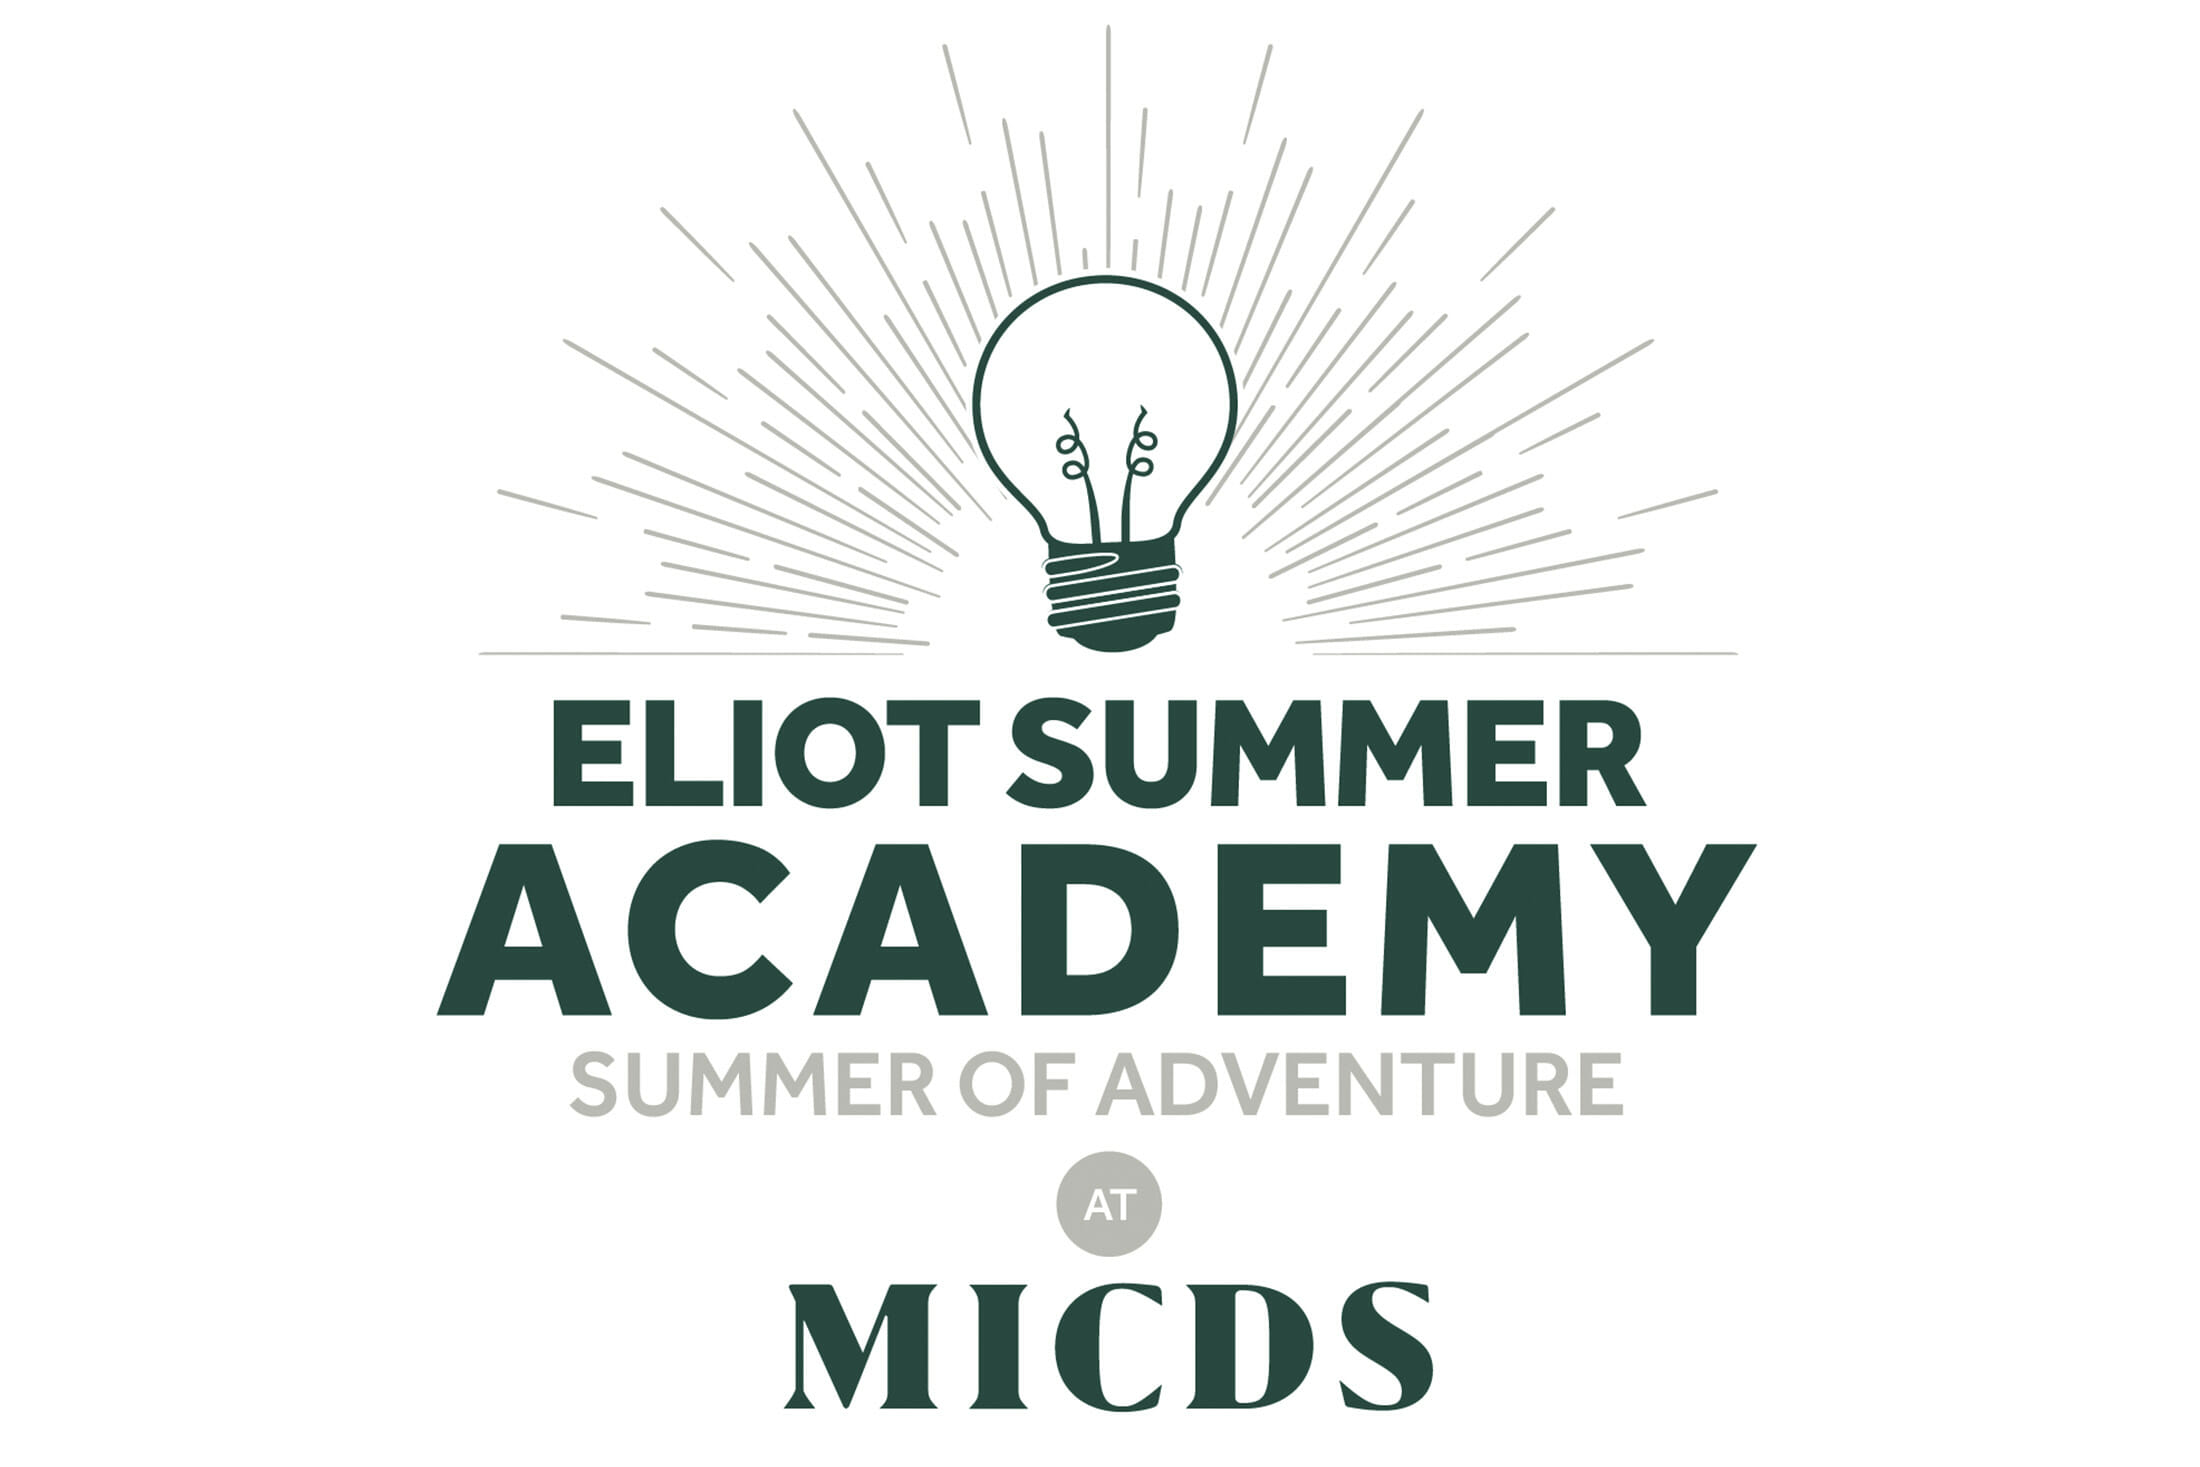 Eliot Summer Academy logo